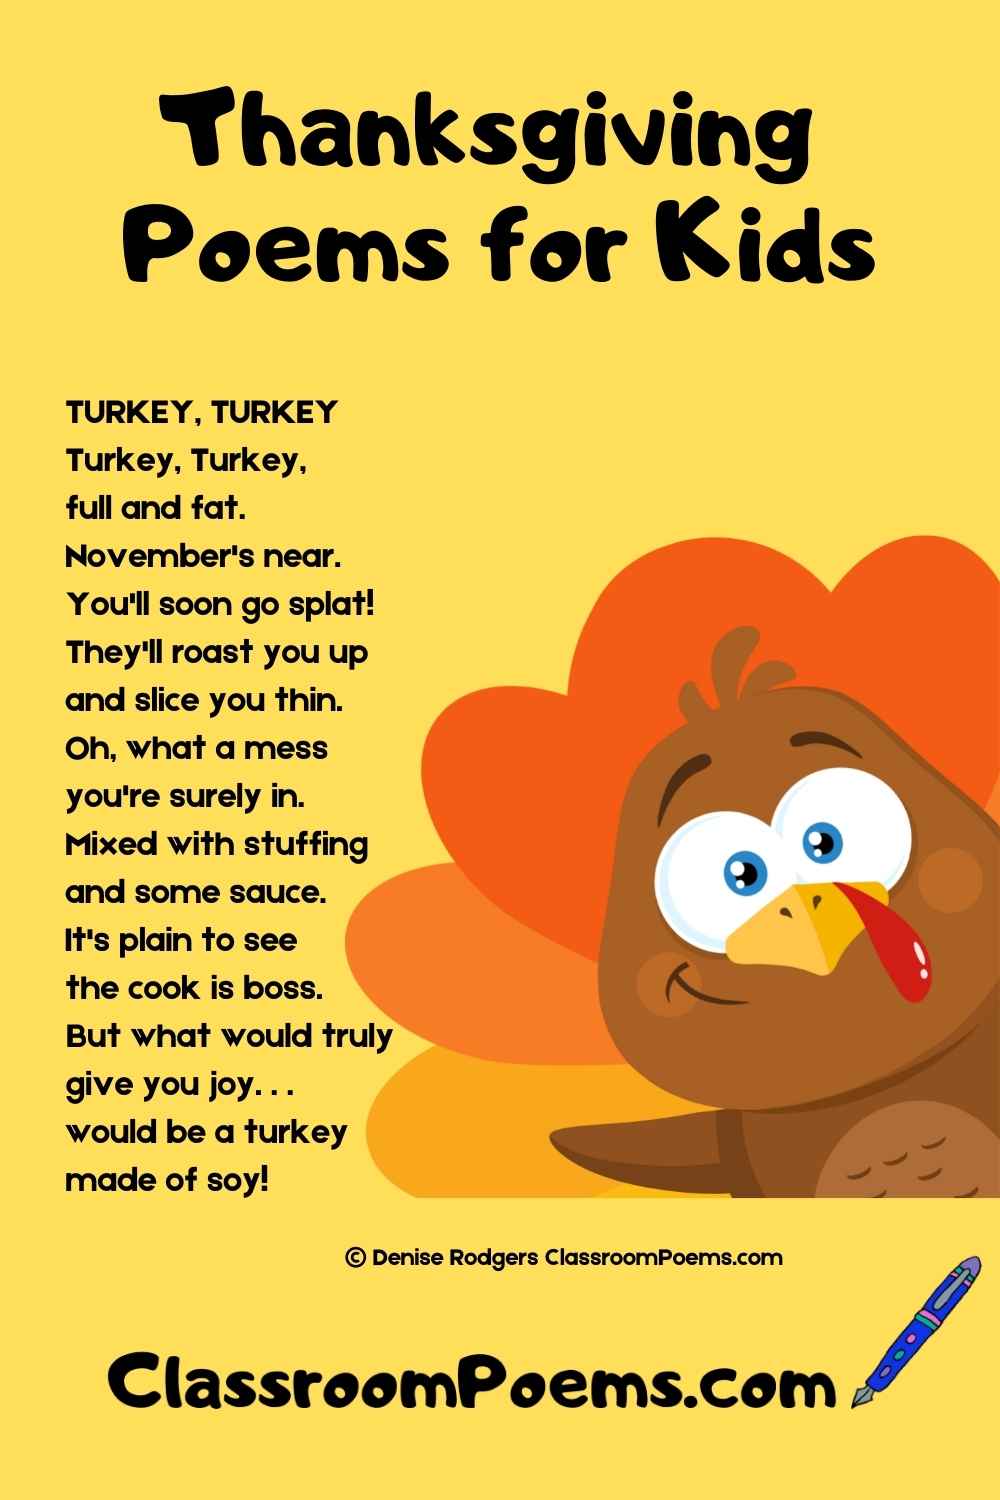 figurative language poems for kids